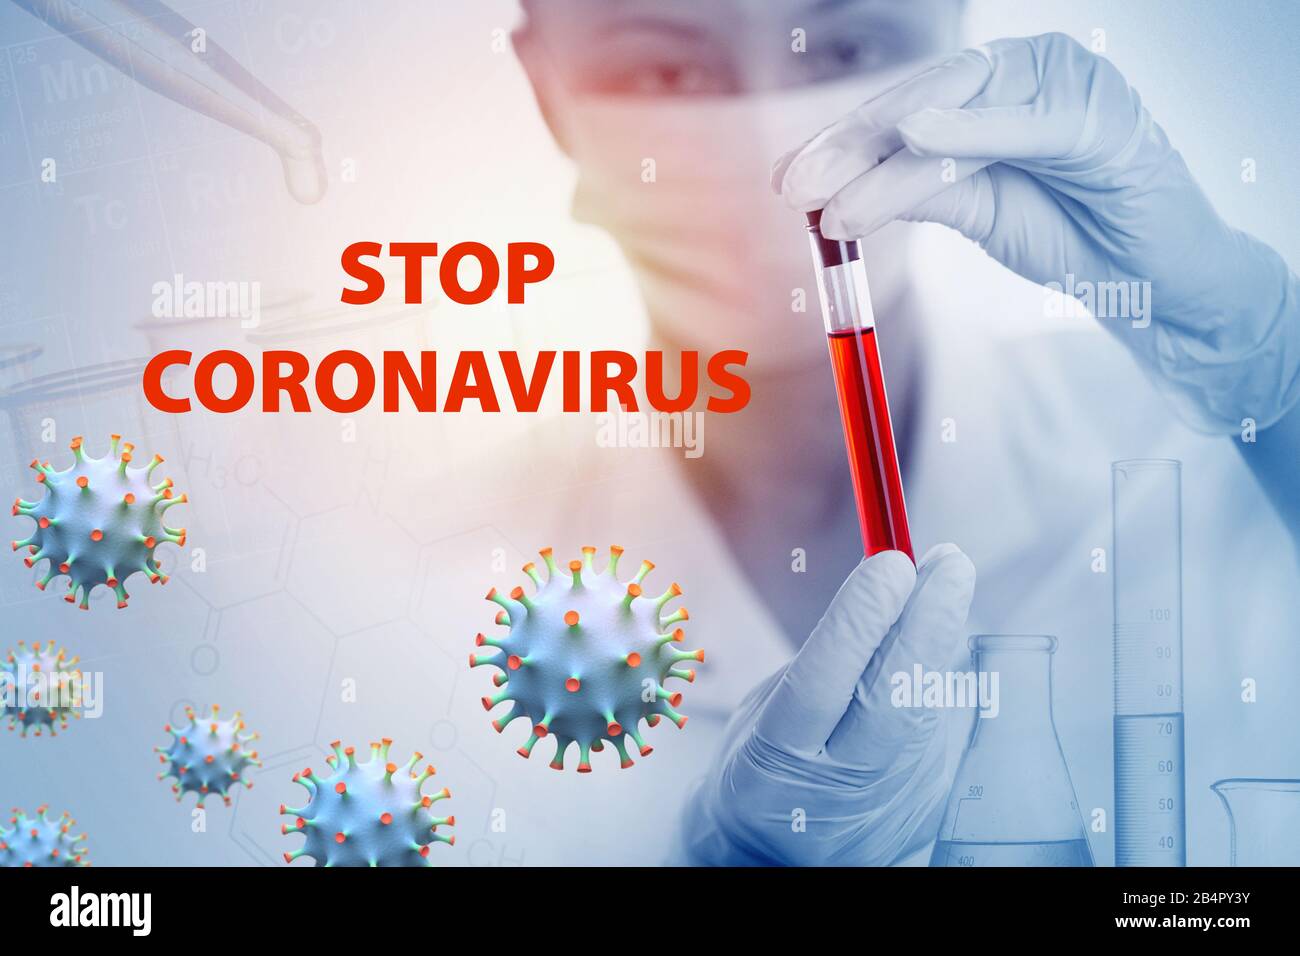 The concept of coronavirus hazard and public health risk. Stop coronovirus. Pandemic medical concept with dangerous cells. 3D illustration. Stock Photo